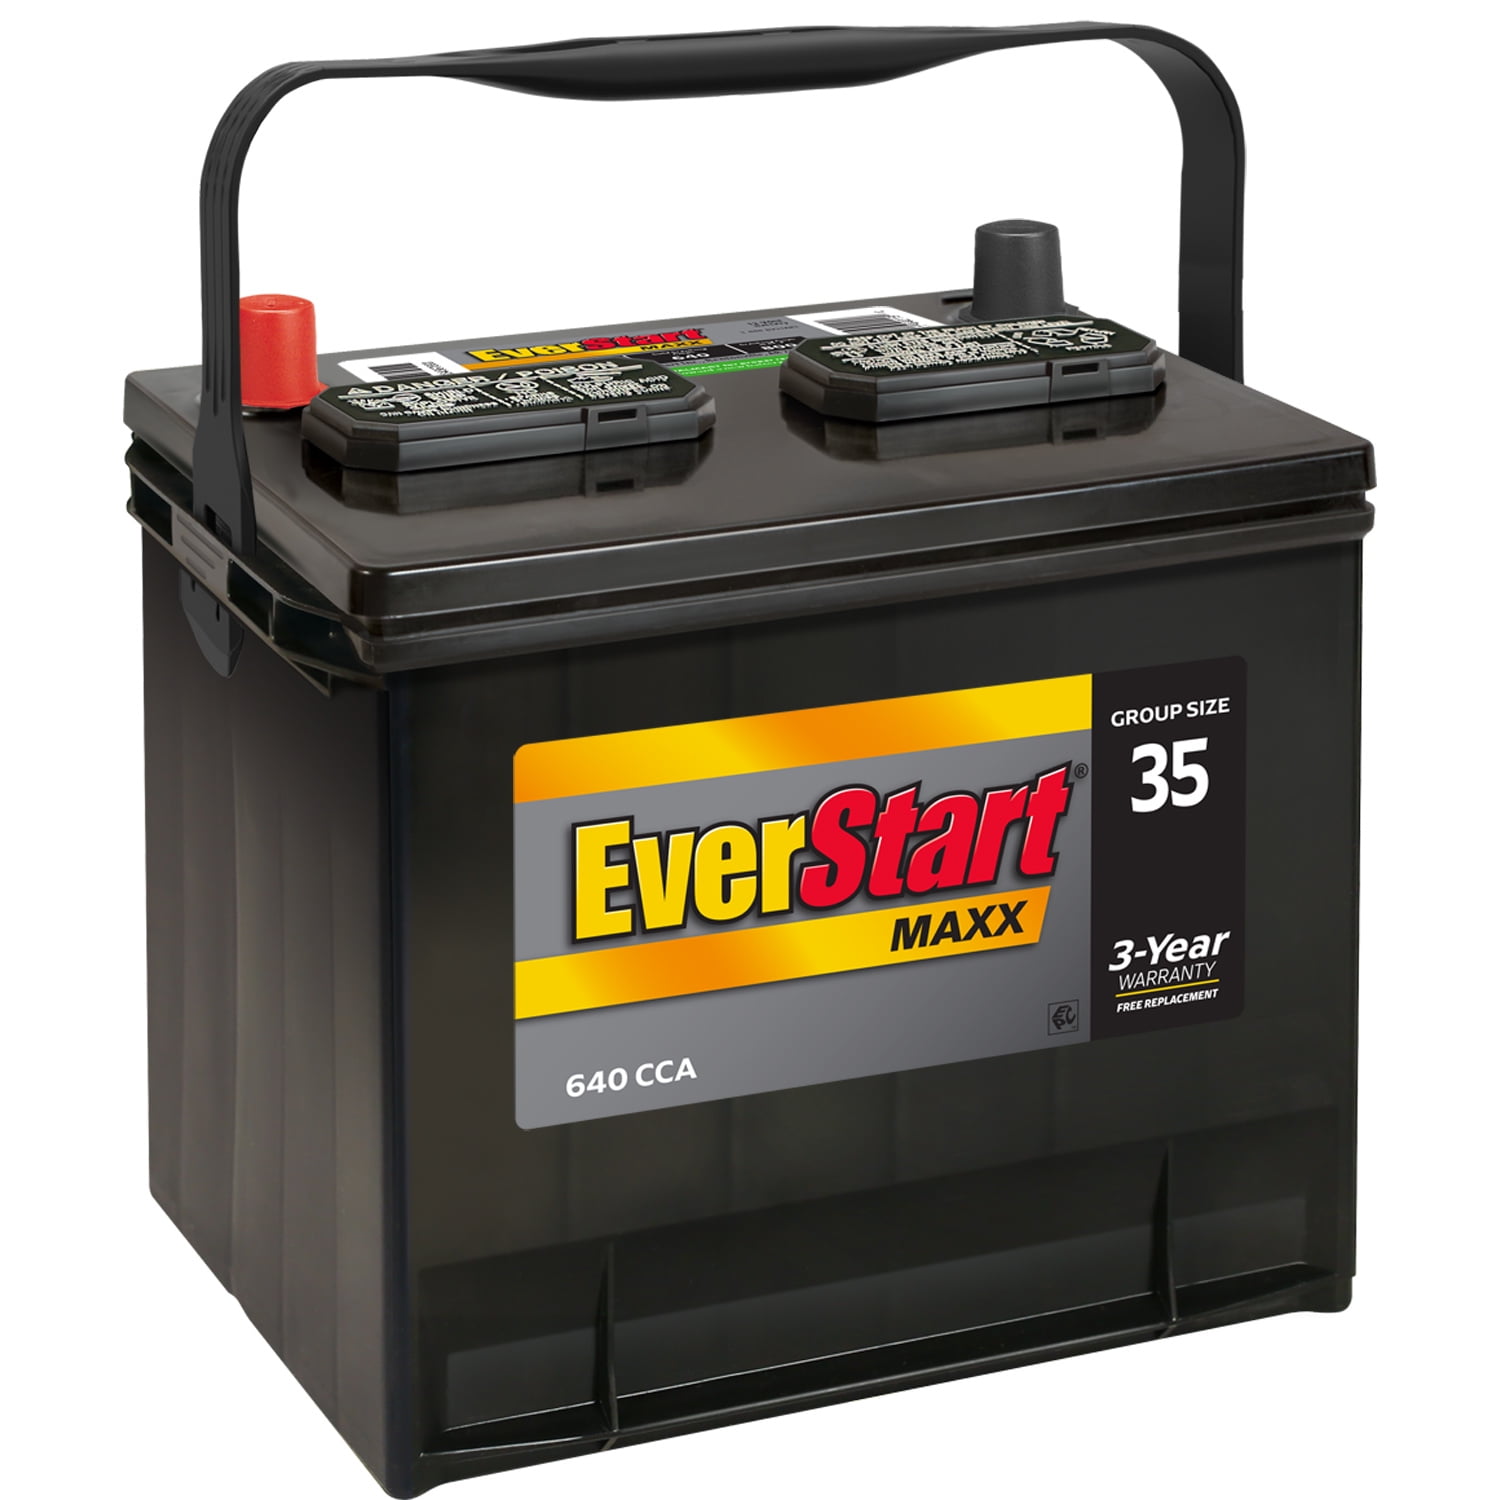 EverStart Maxx Lead Acid Automotive Battery, Group Size 35N, 12 Volt 640 CCA